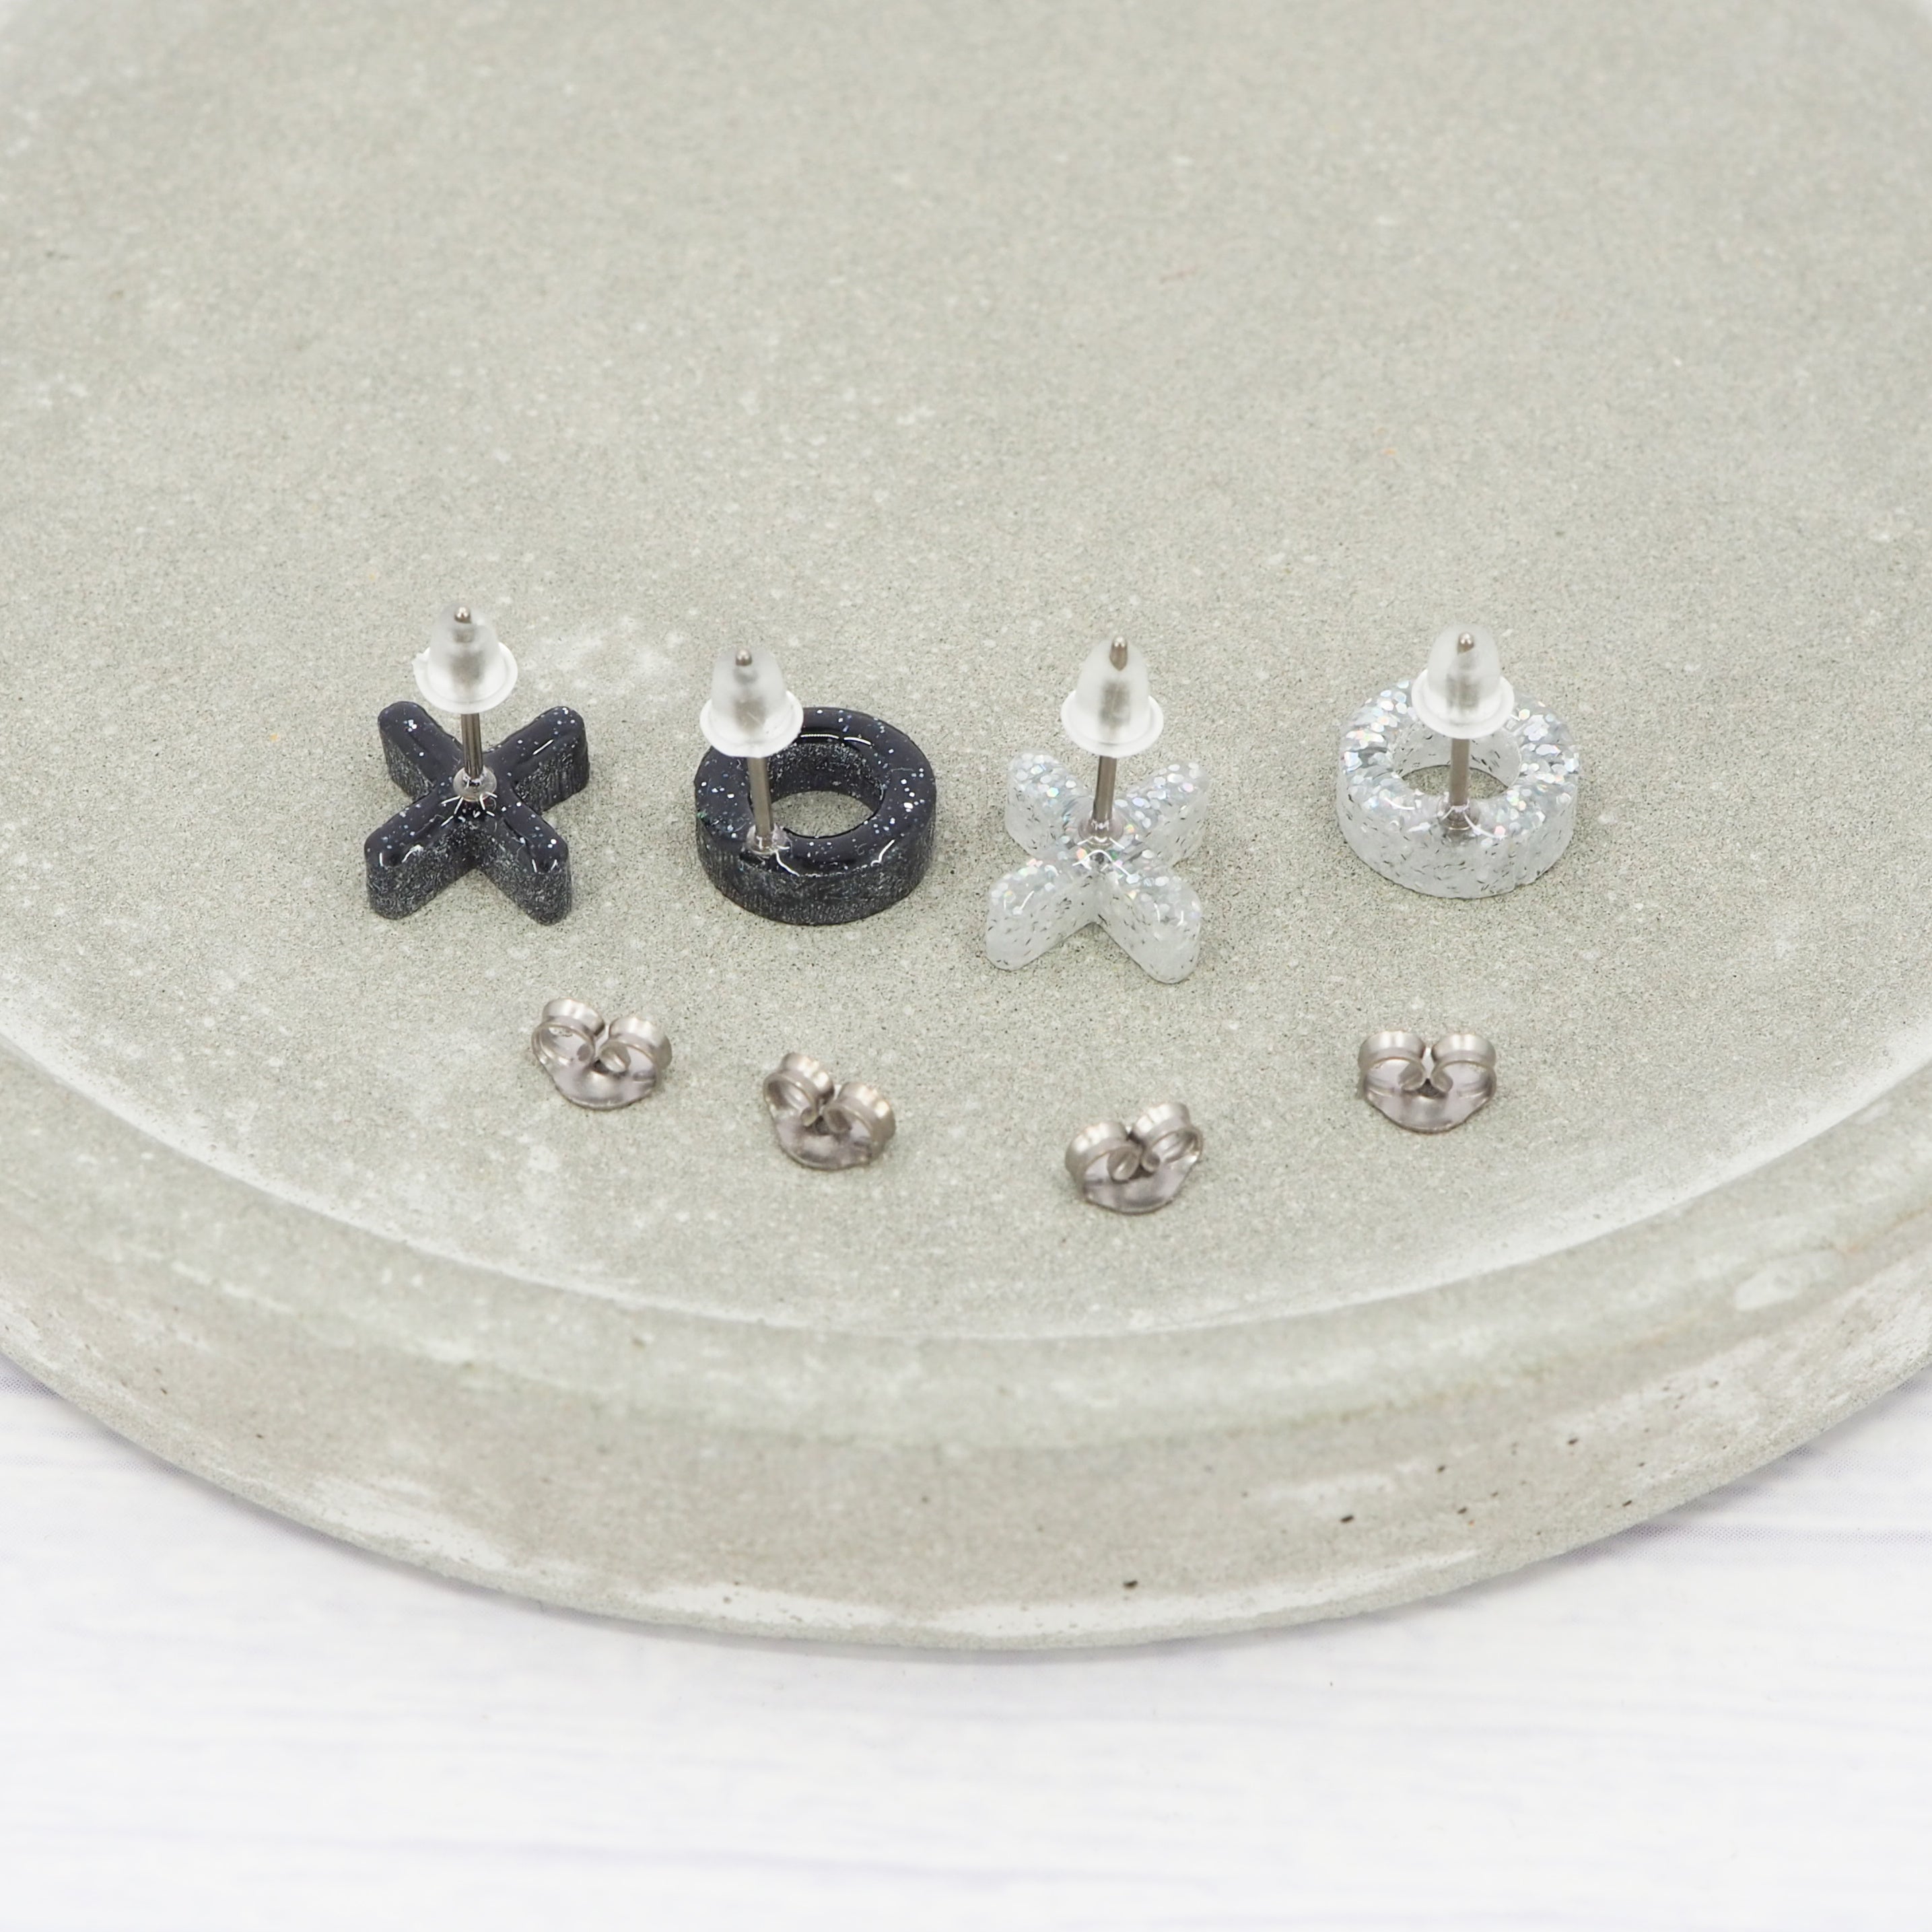 Hypoallergenic titanium replacement earring hooks – Serenity Jewellery UK